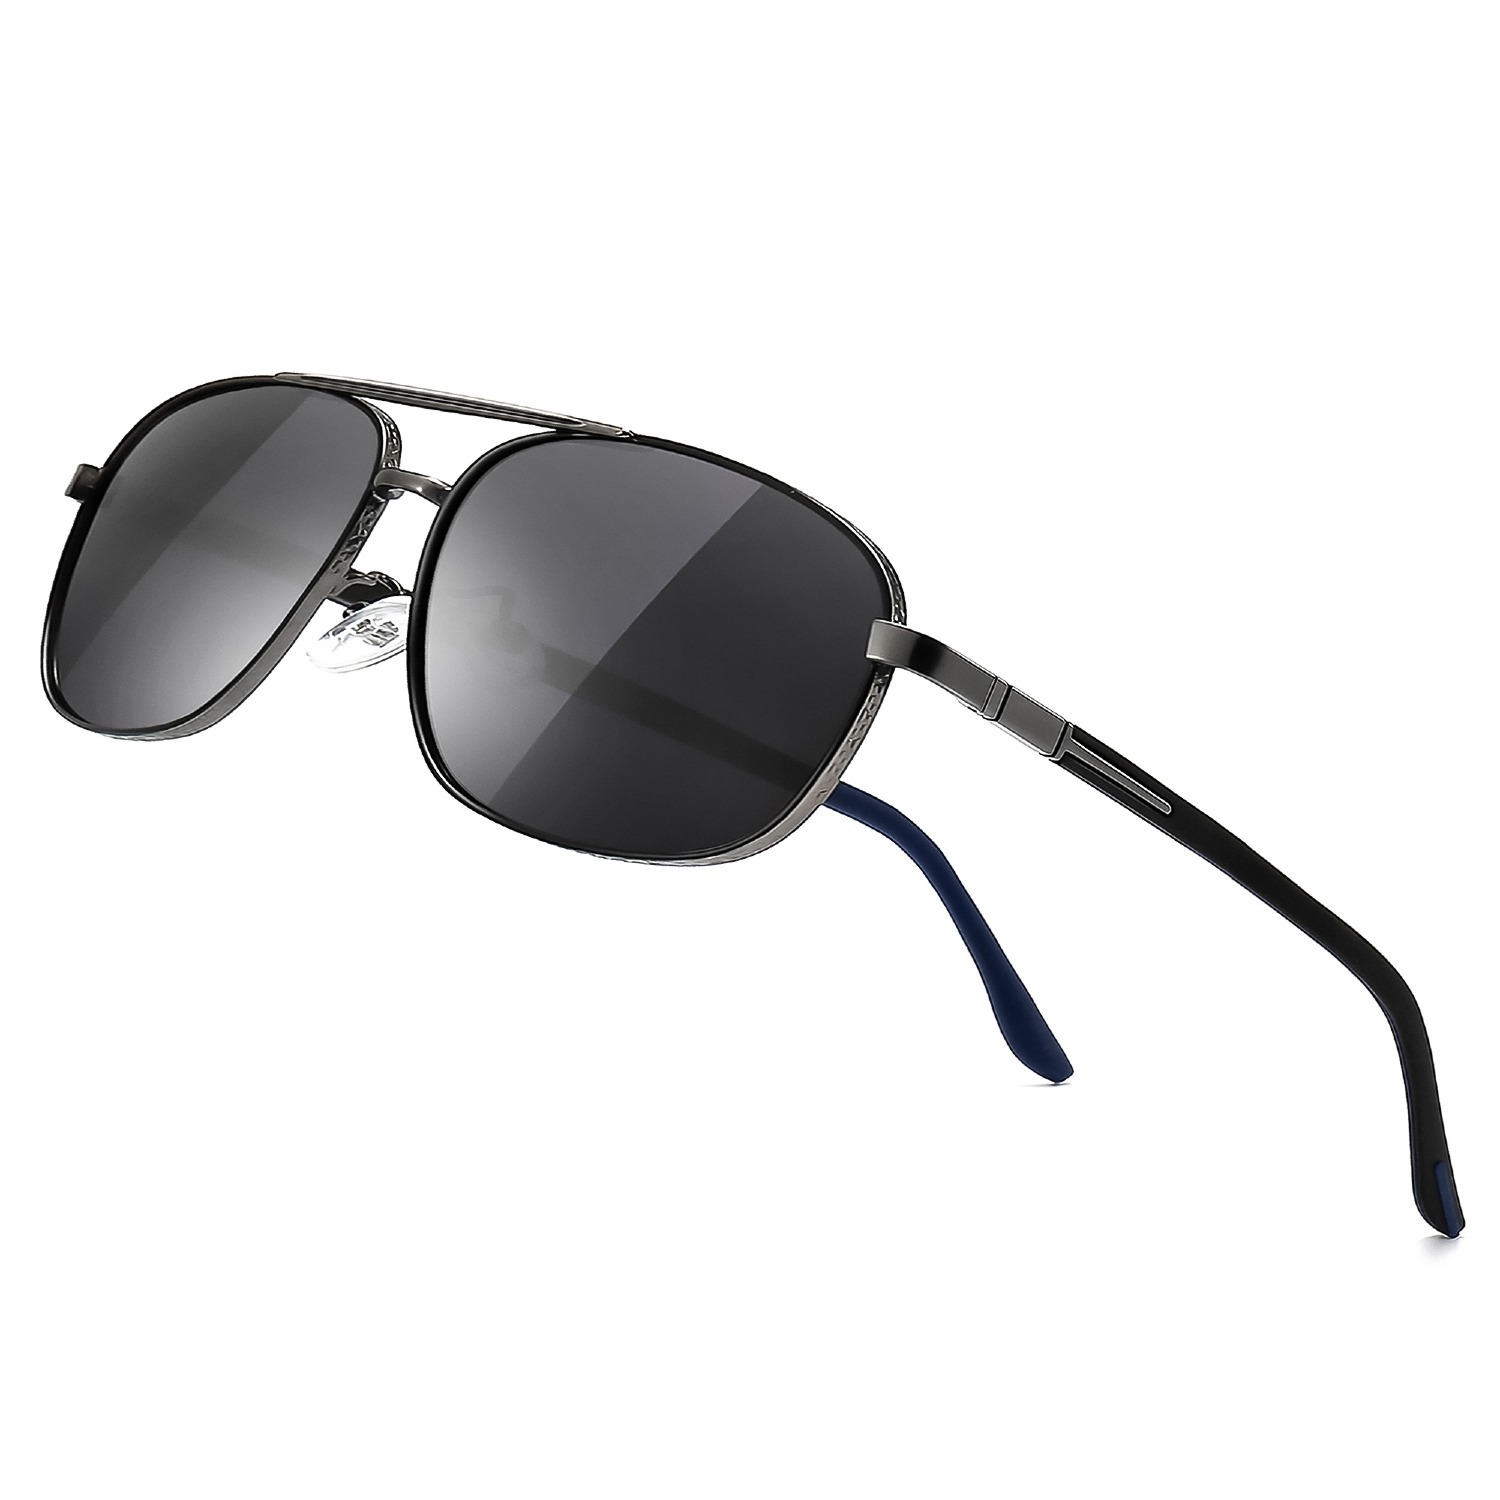 SUNGAIT Men's Polarized Square Aviator Sunglasses $8 + Free shipping w/ Prime or $25